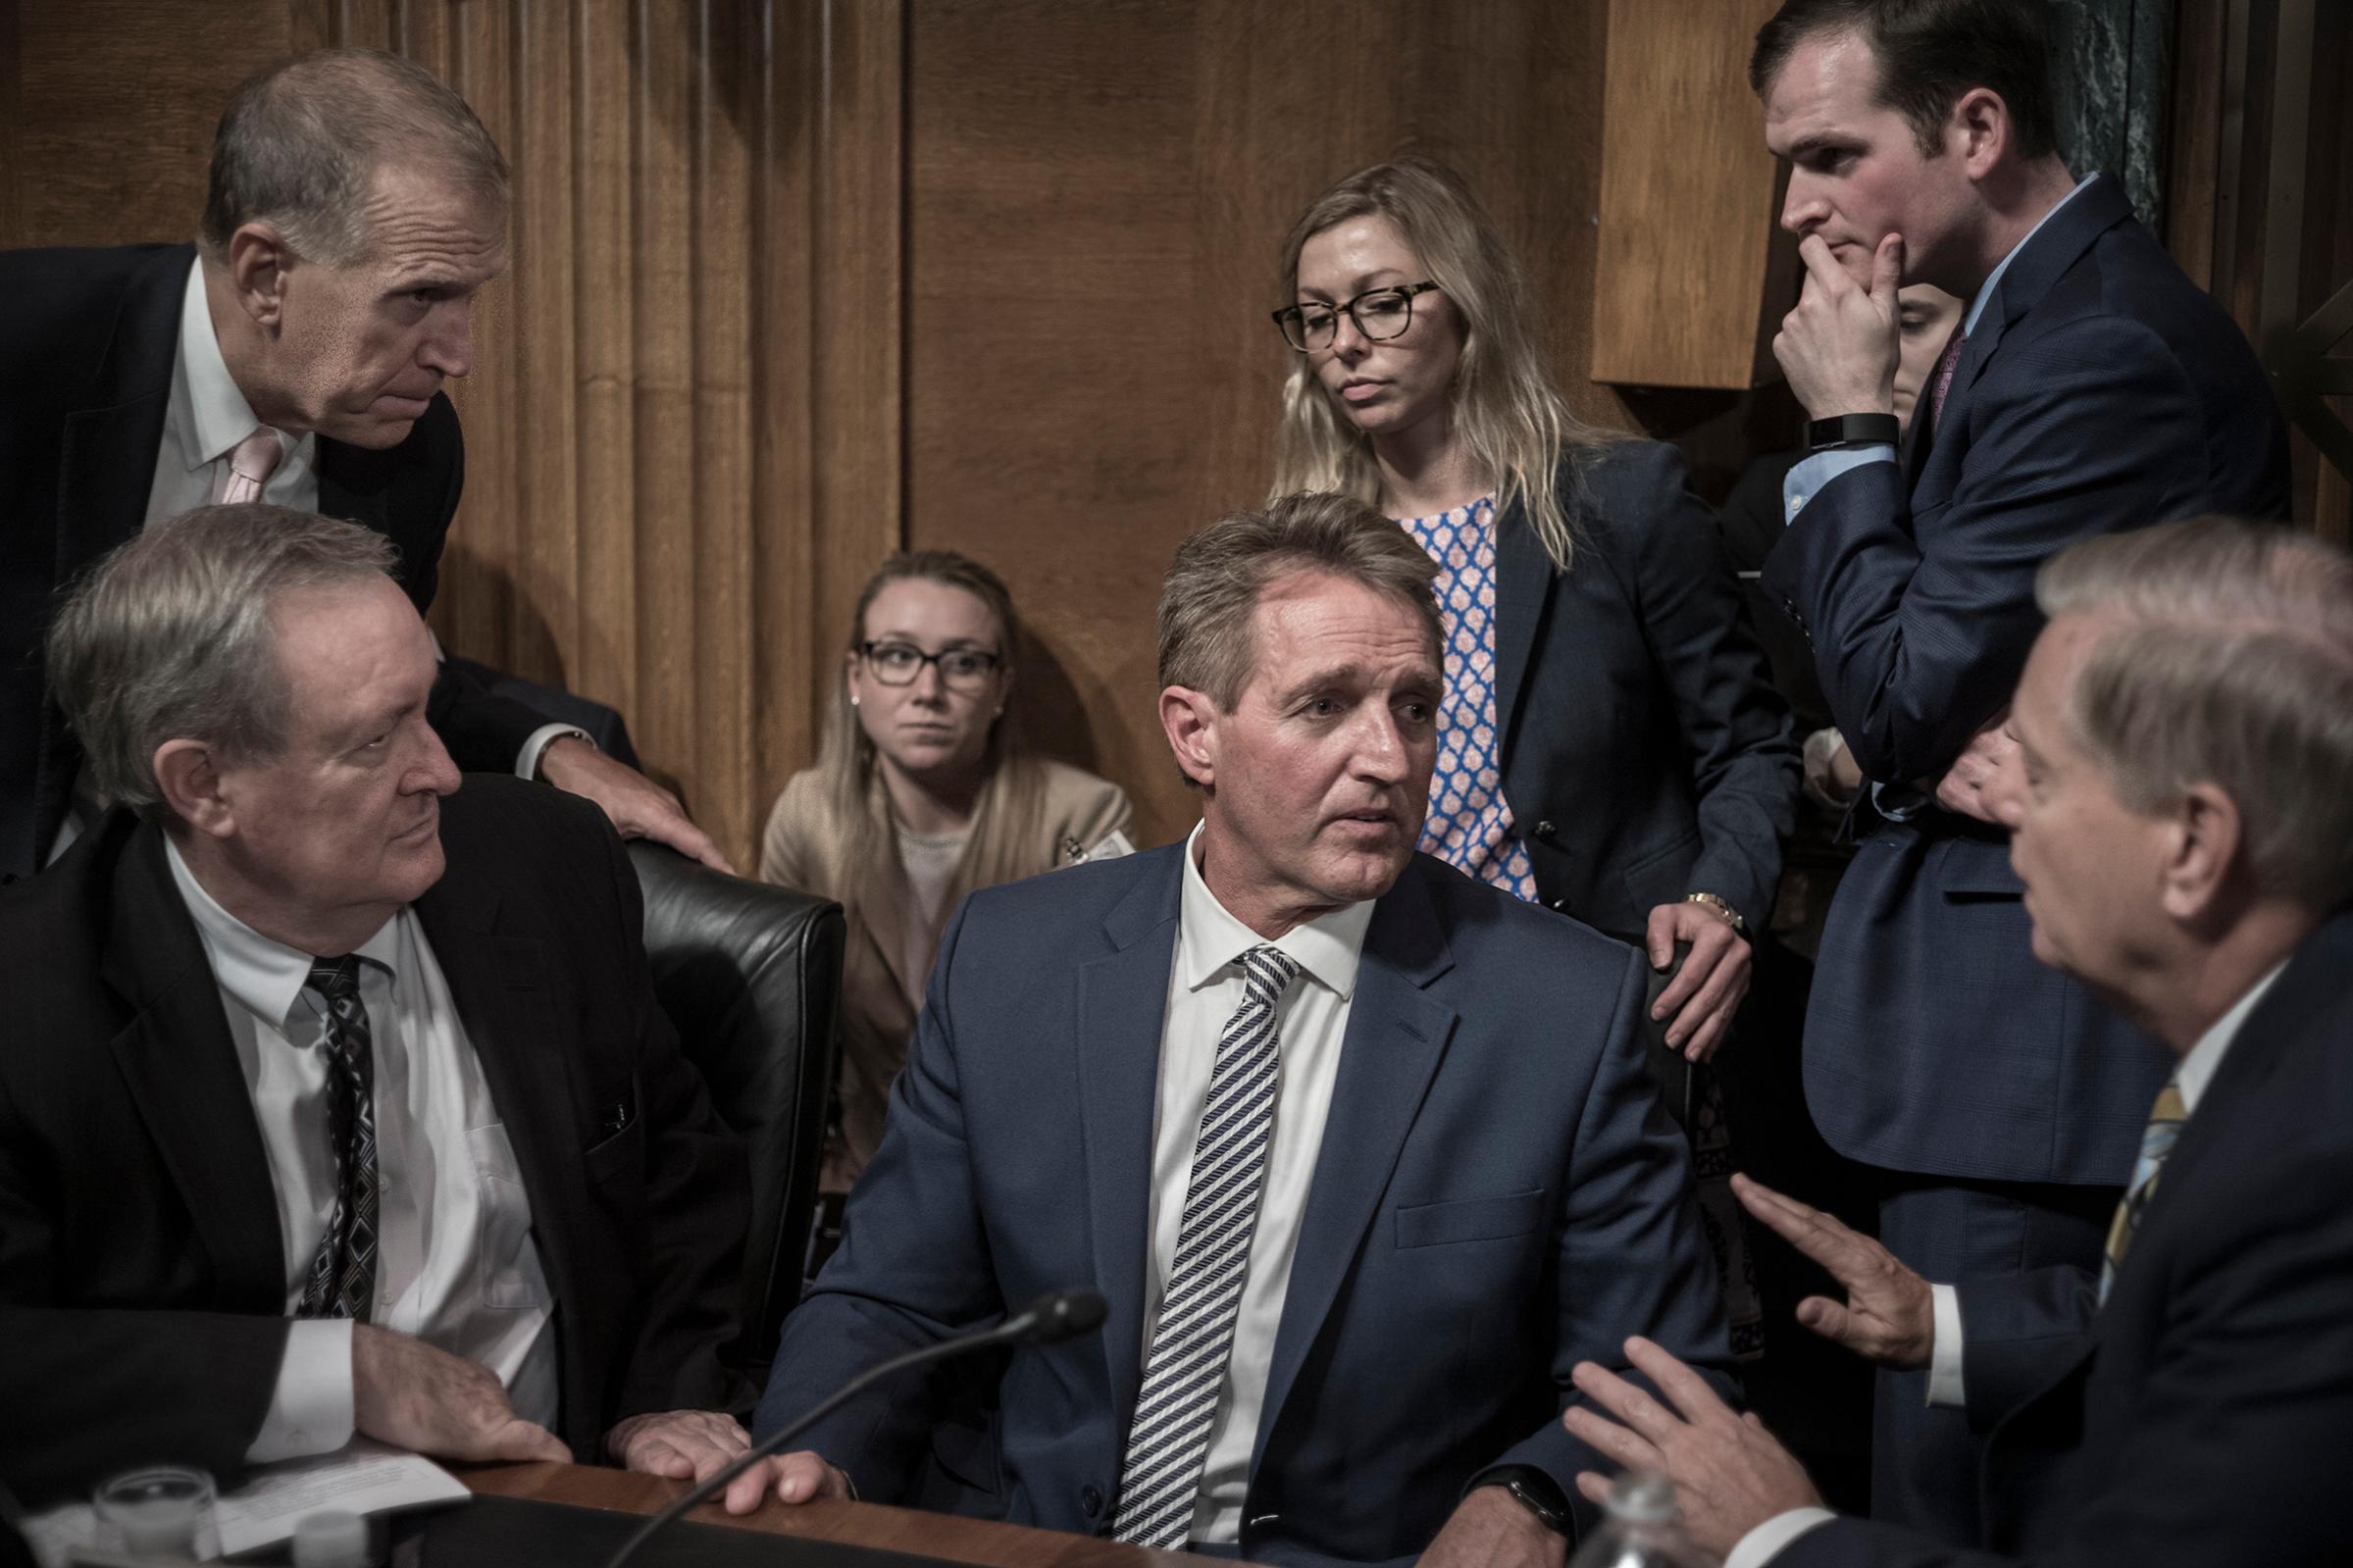 GOP Senators surround Senator Jeff Flake, who slowed Kavanaugh’s confirmation after Ford testified